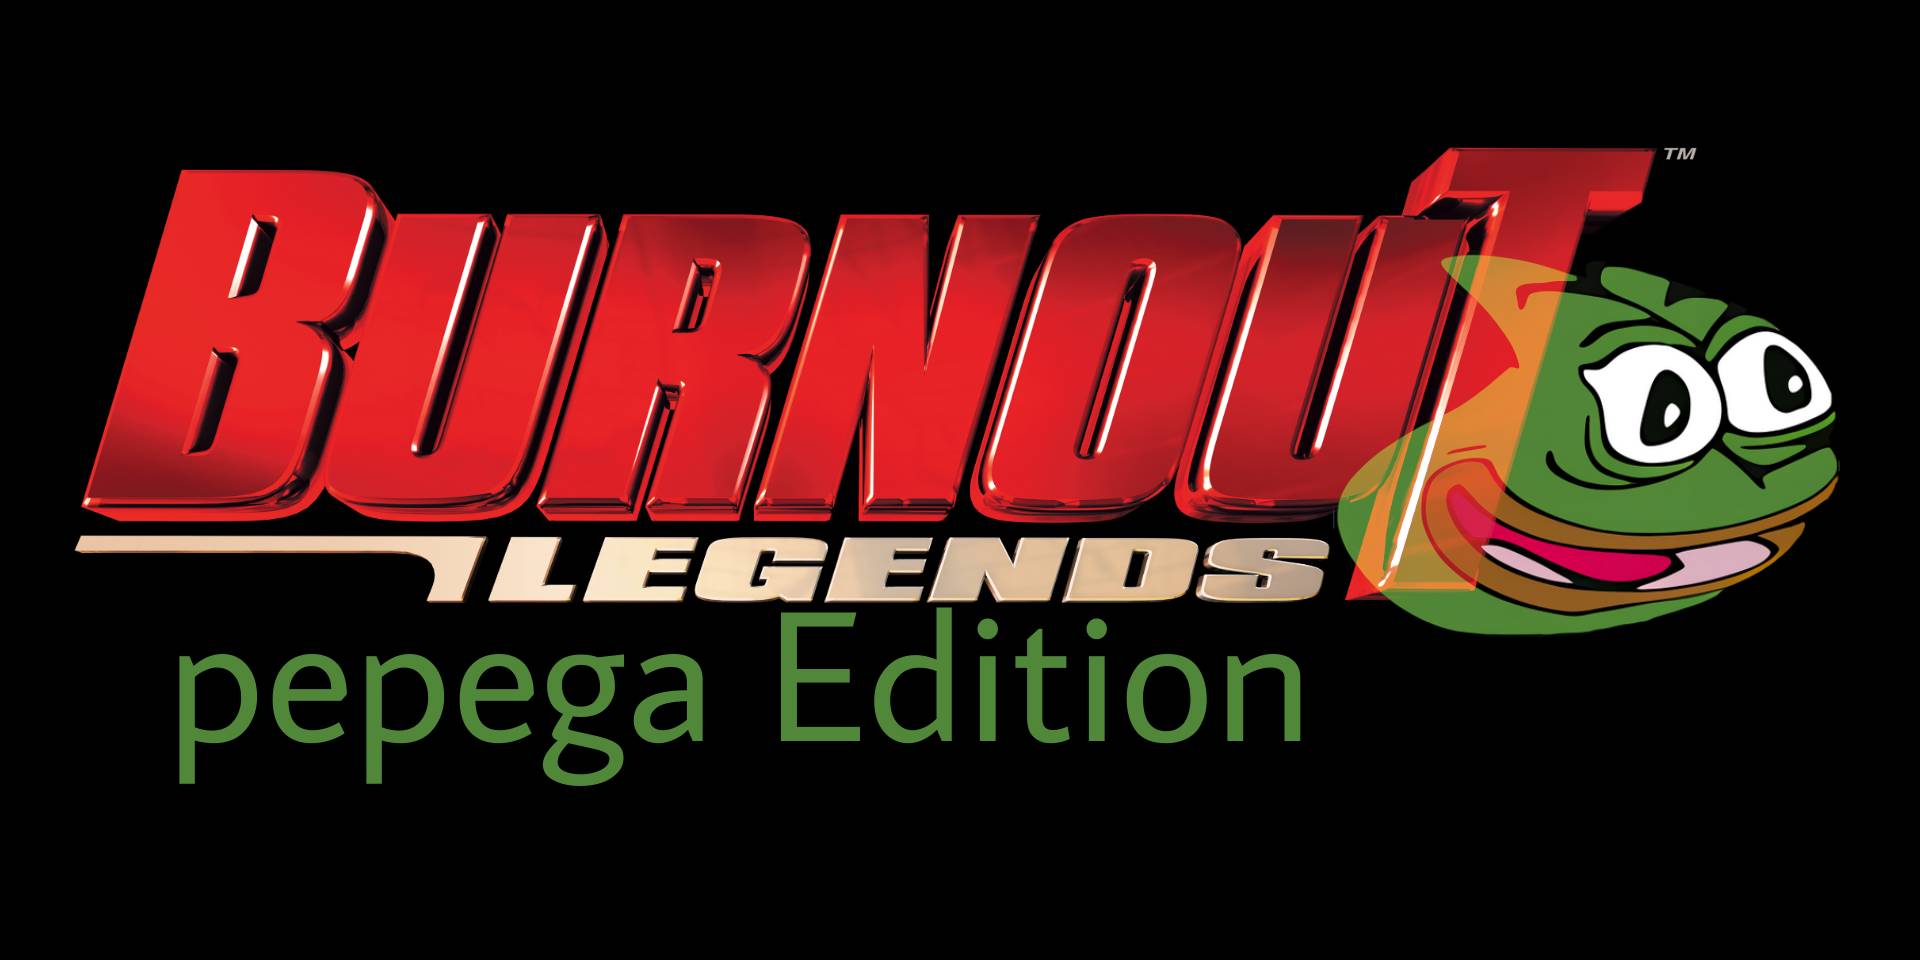 Burnout Legends: Pepega Edition Logo Image by StevenWicky199 on DeviantArt